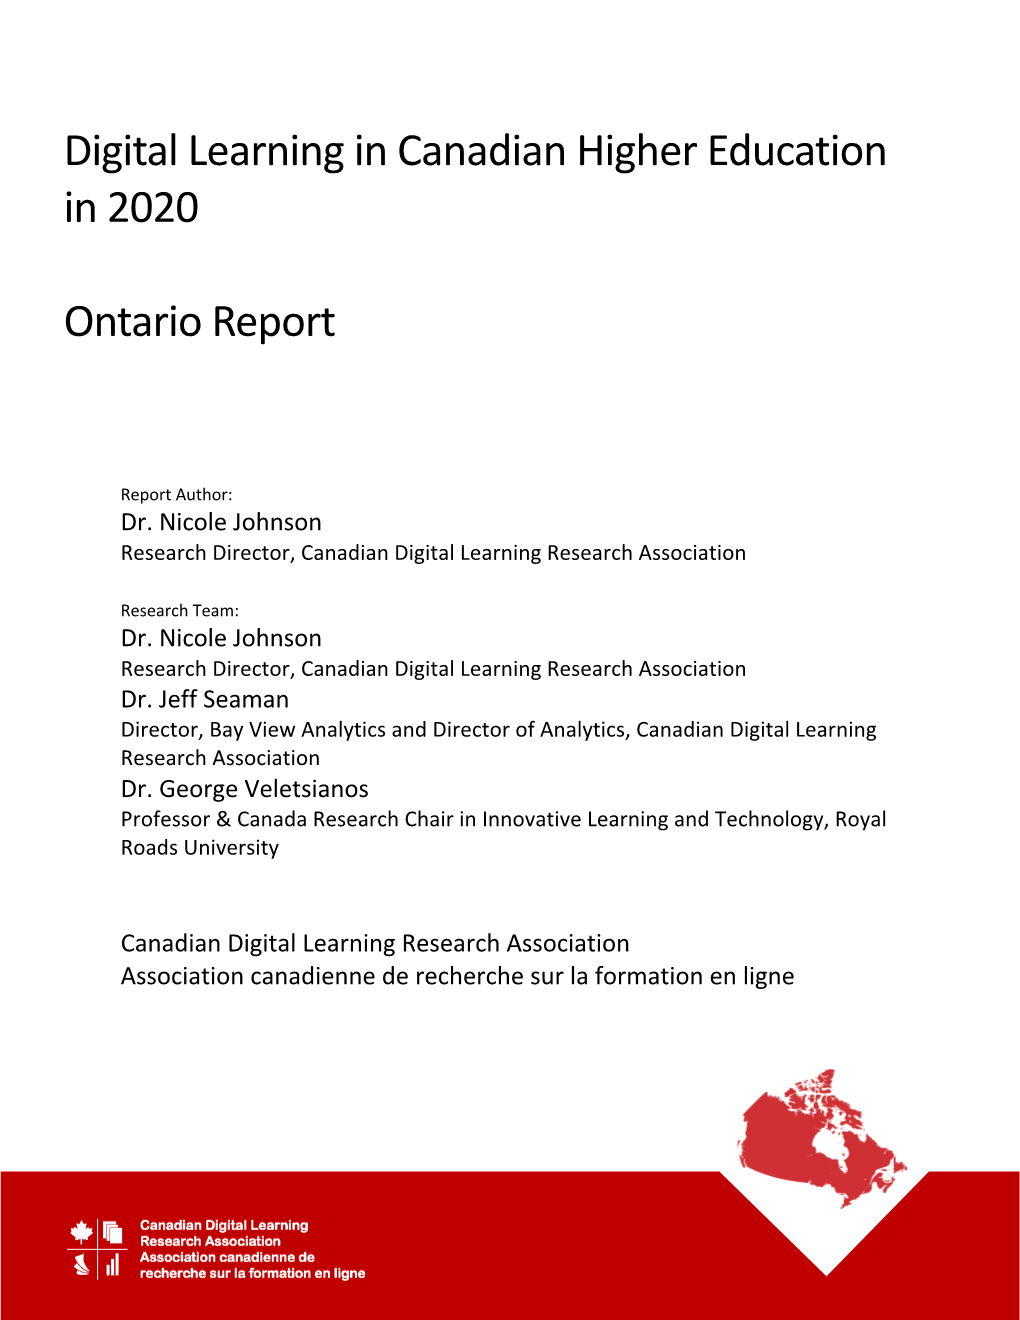 Digital Learning in Canadian Higher Education in 2020